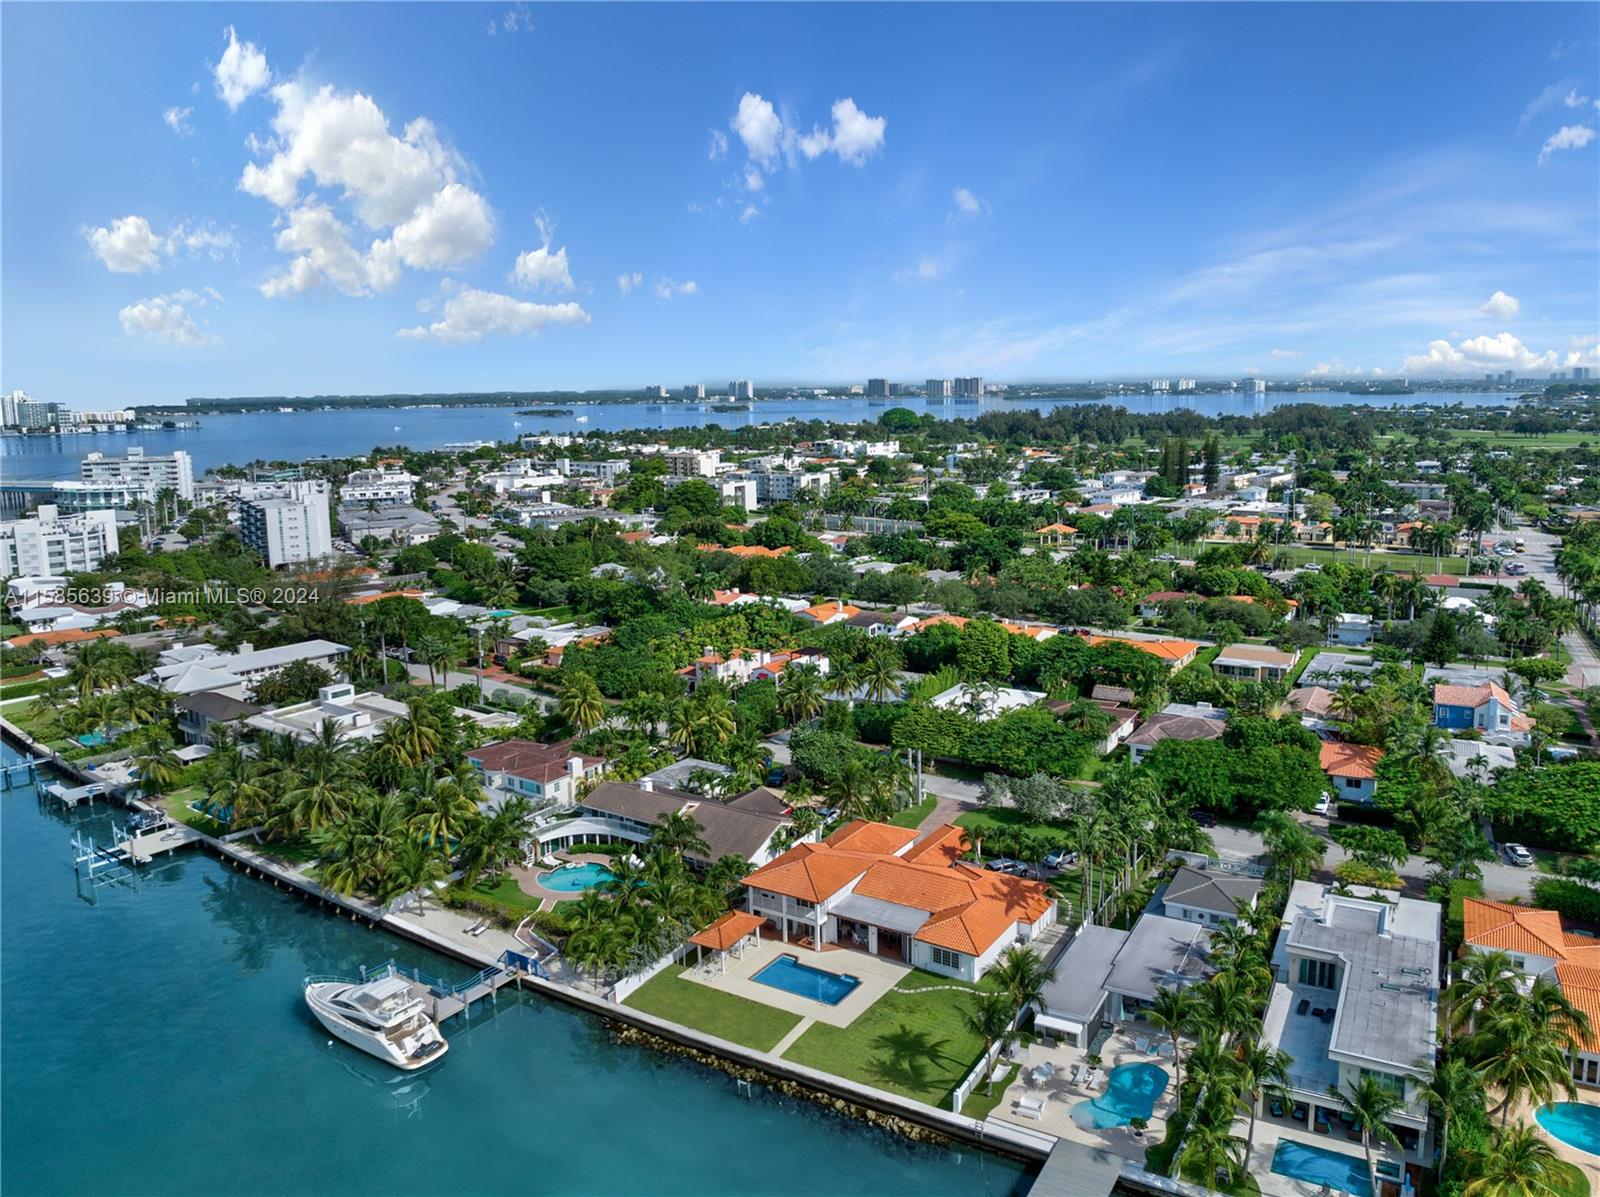 Property for Sale at 1730 Bay Dr, Miami Beach, Miami-Dade County, Florida - Bedrooms: 5 
Bathrooms: 3  - $9,650,000